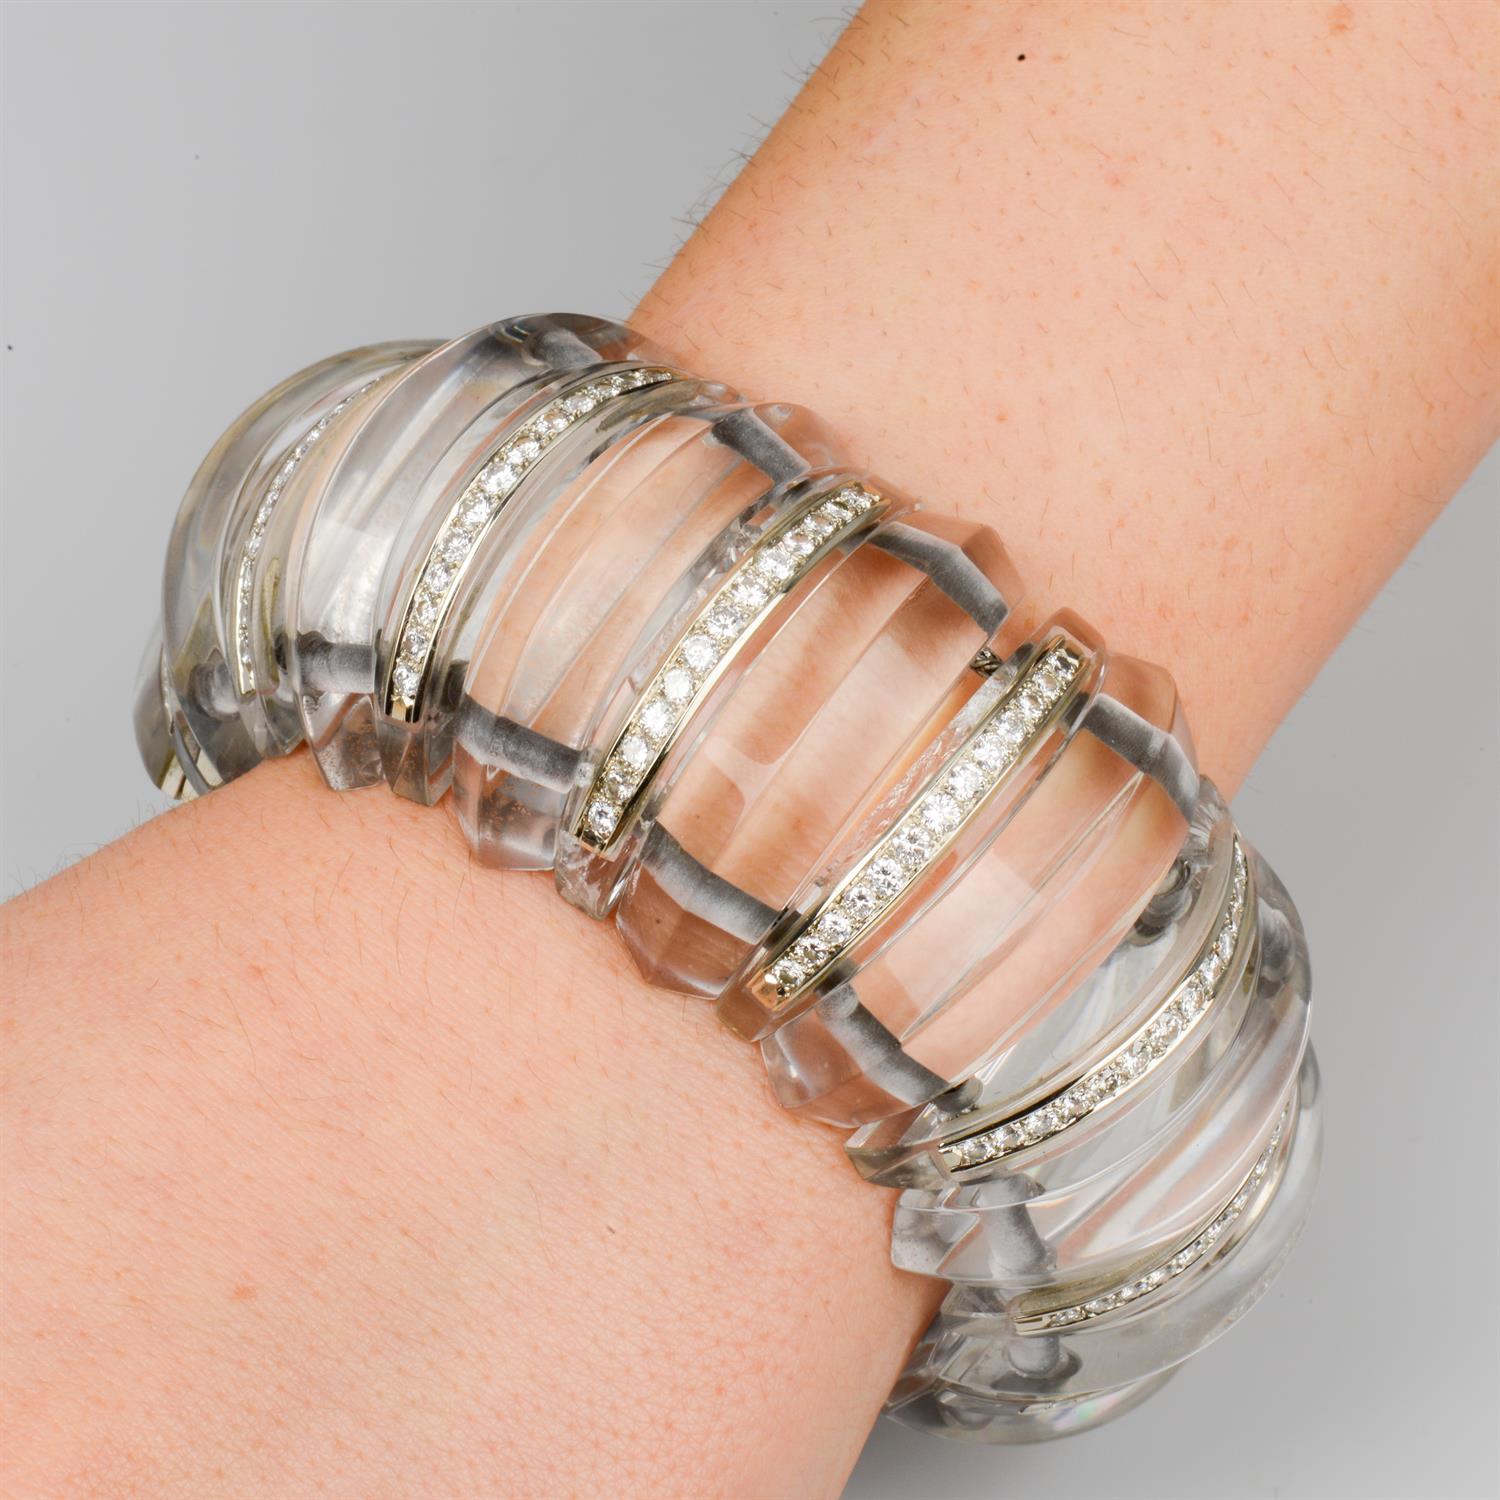 Diamond and rock crystal bracelet, by Demner